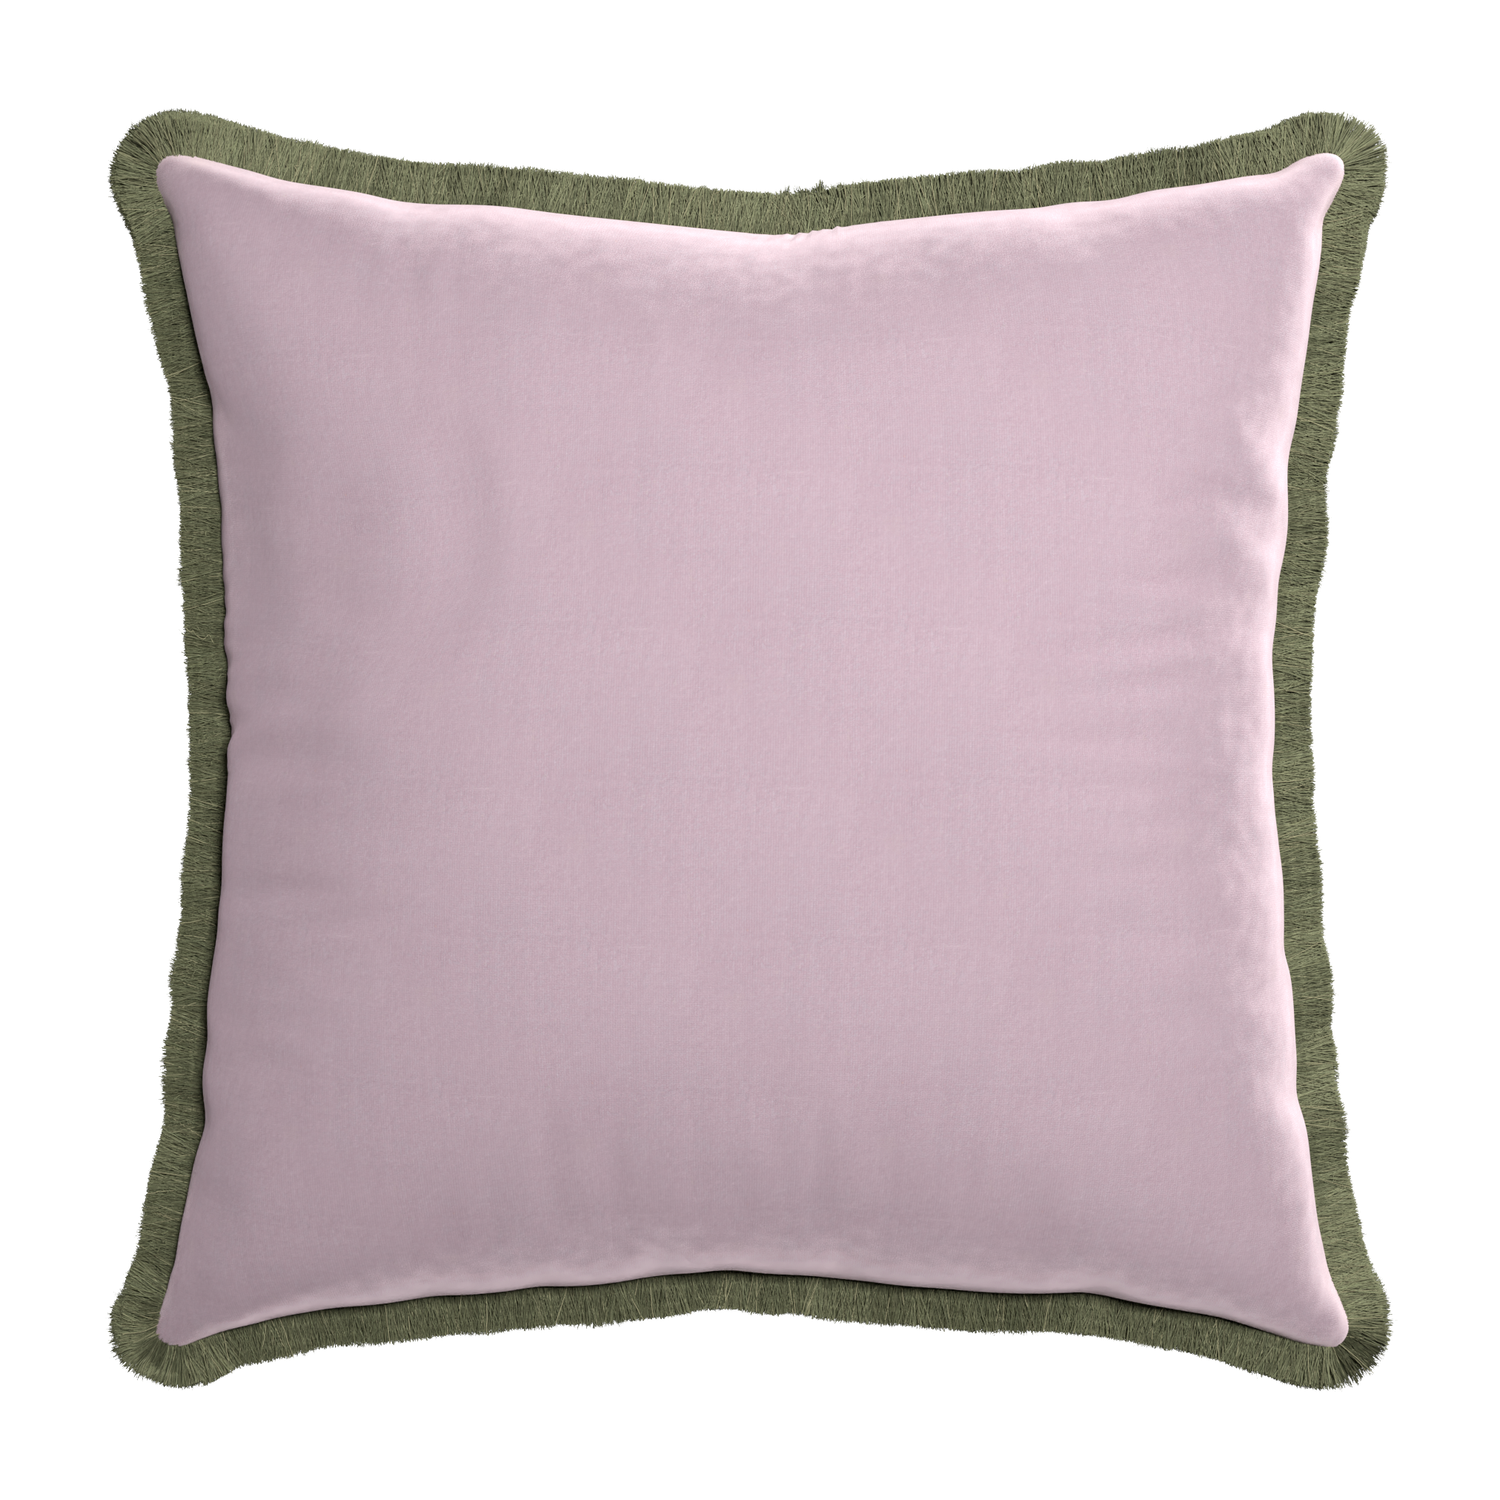 Euro-sham lilac velvet custom pillow with sage fringe on white background